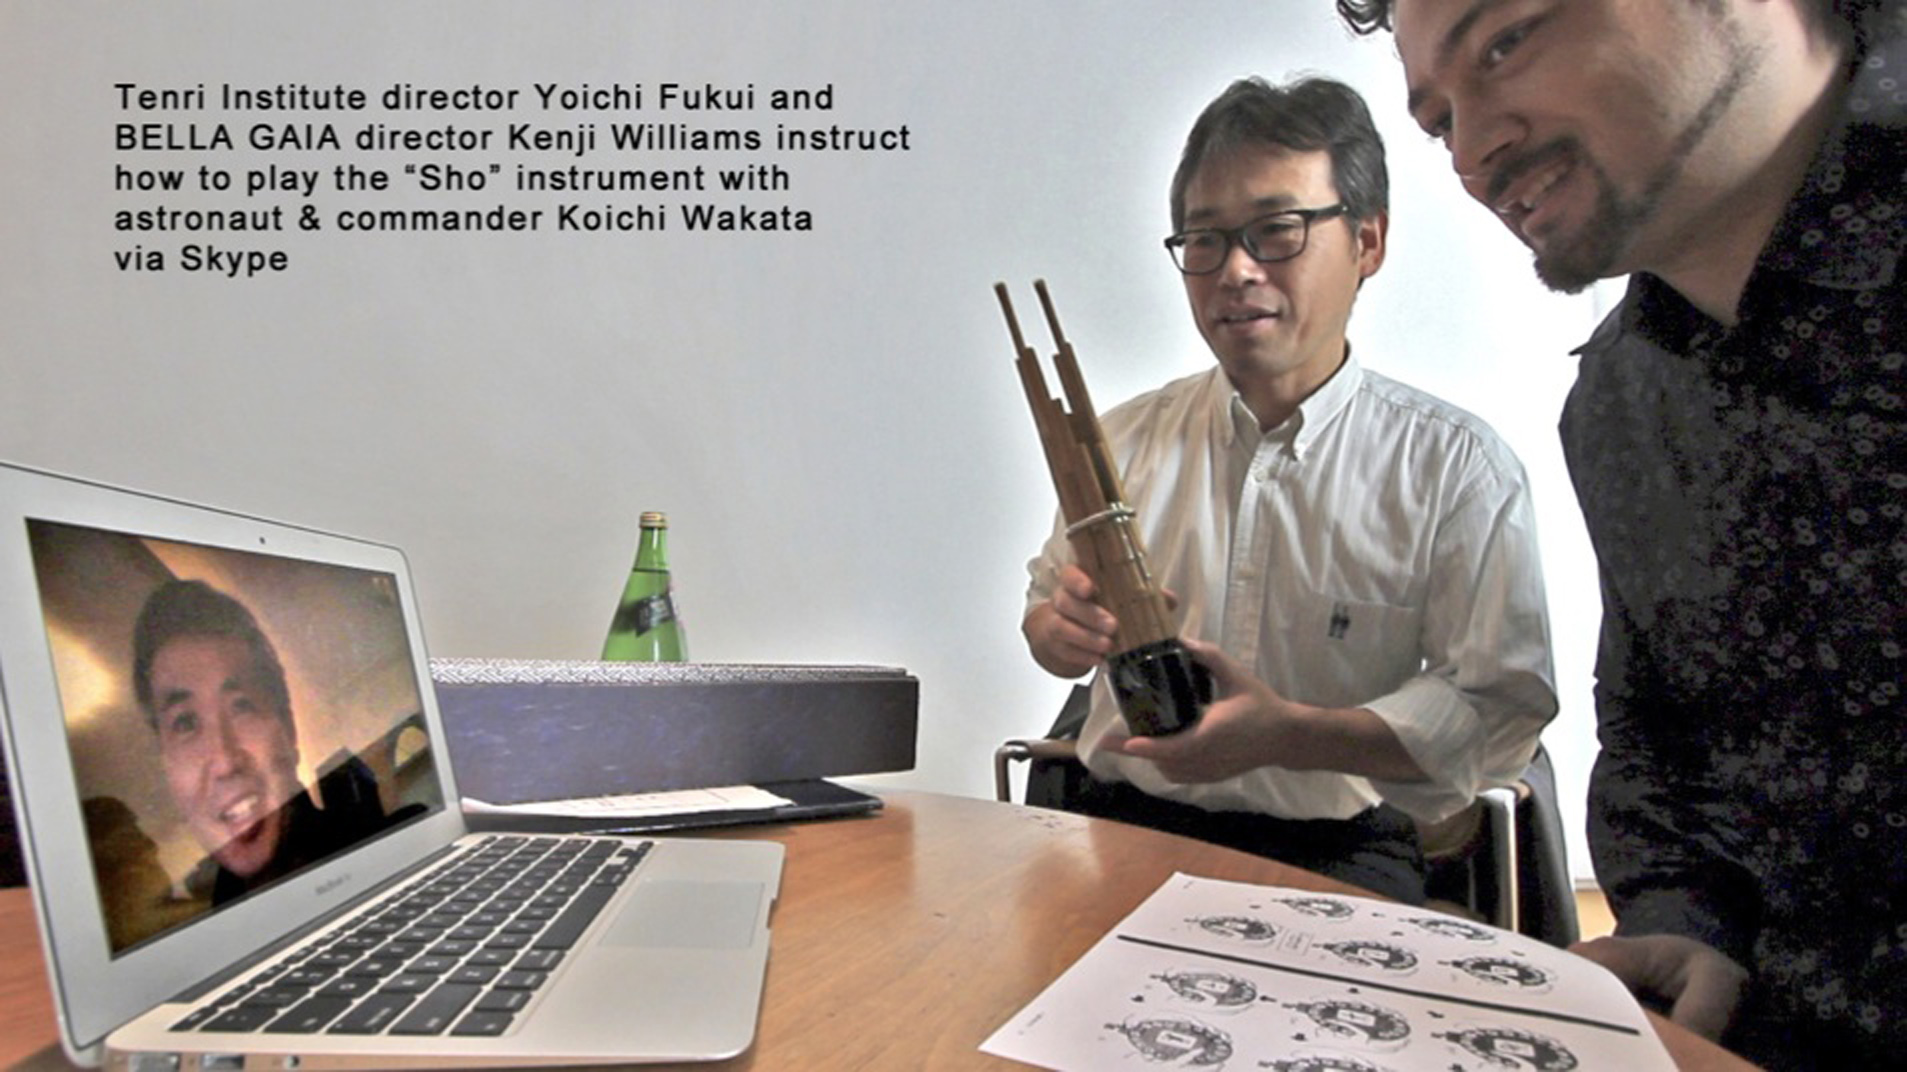 Tenri Institue director Yoichi Fukui and BELLA GAIA director, Kenji Williams instruct how to play the "Sho" instrument with astronaut and commander Koichi Wakata via Skype.